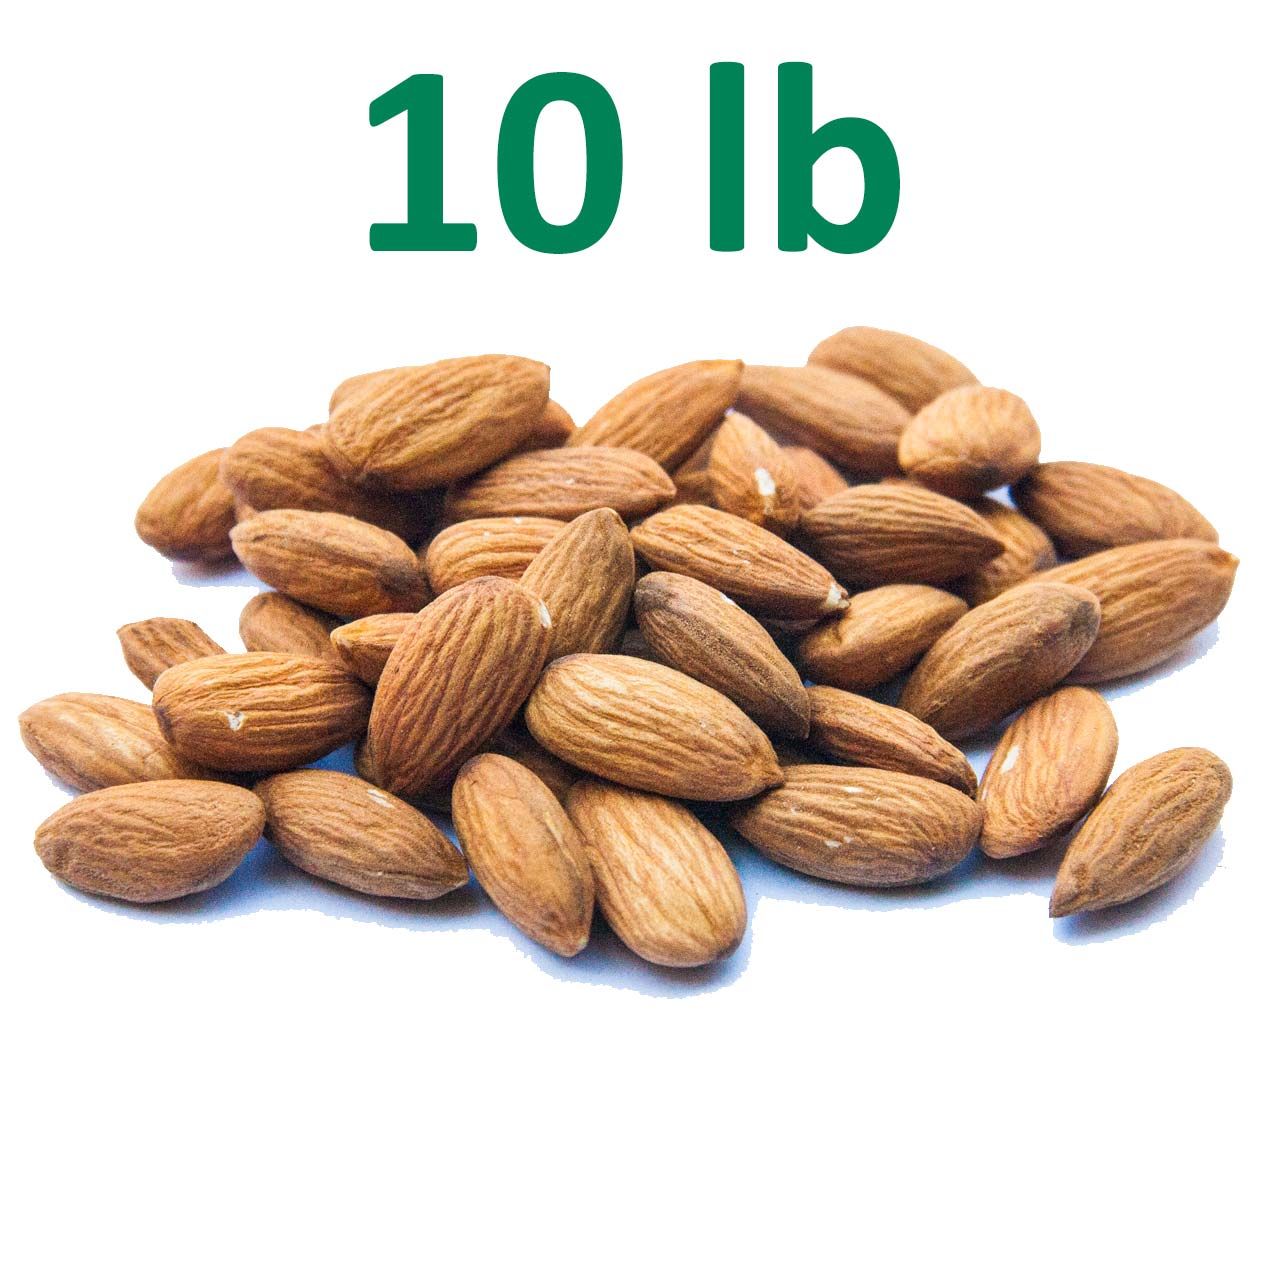 raw unpasteurized almonds